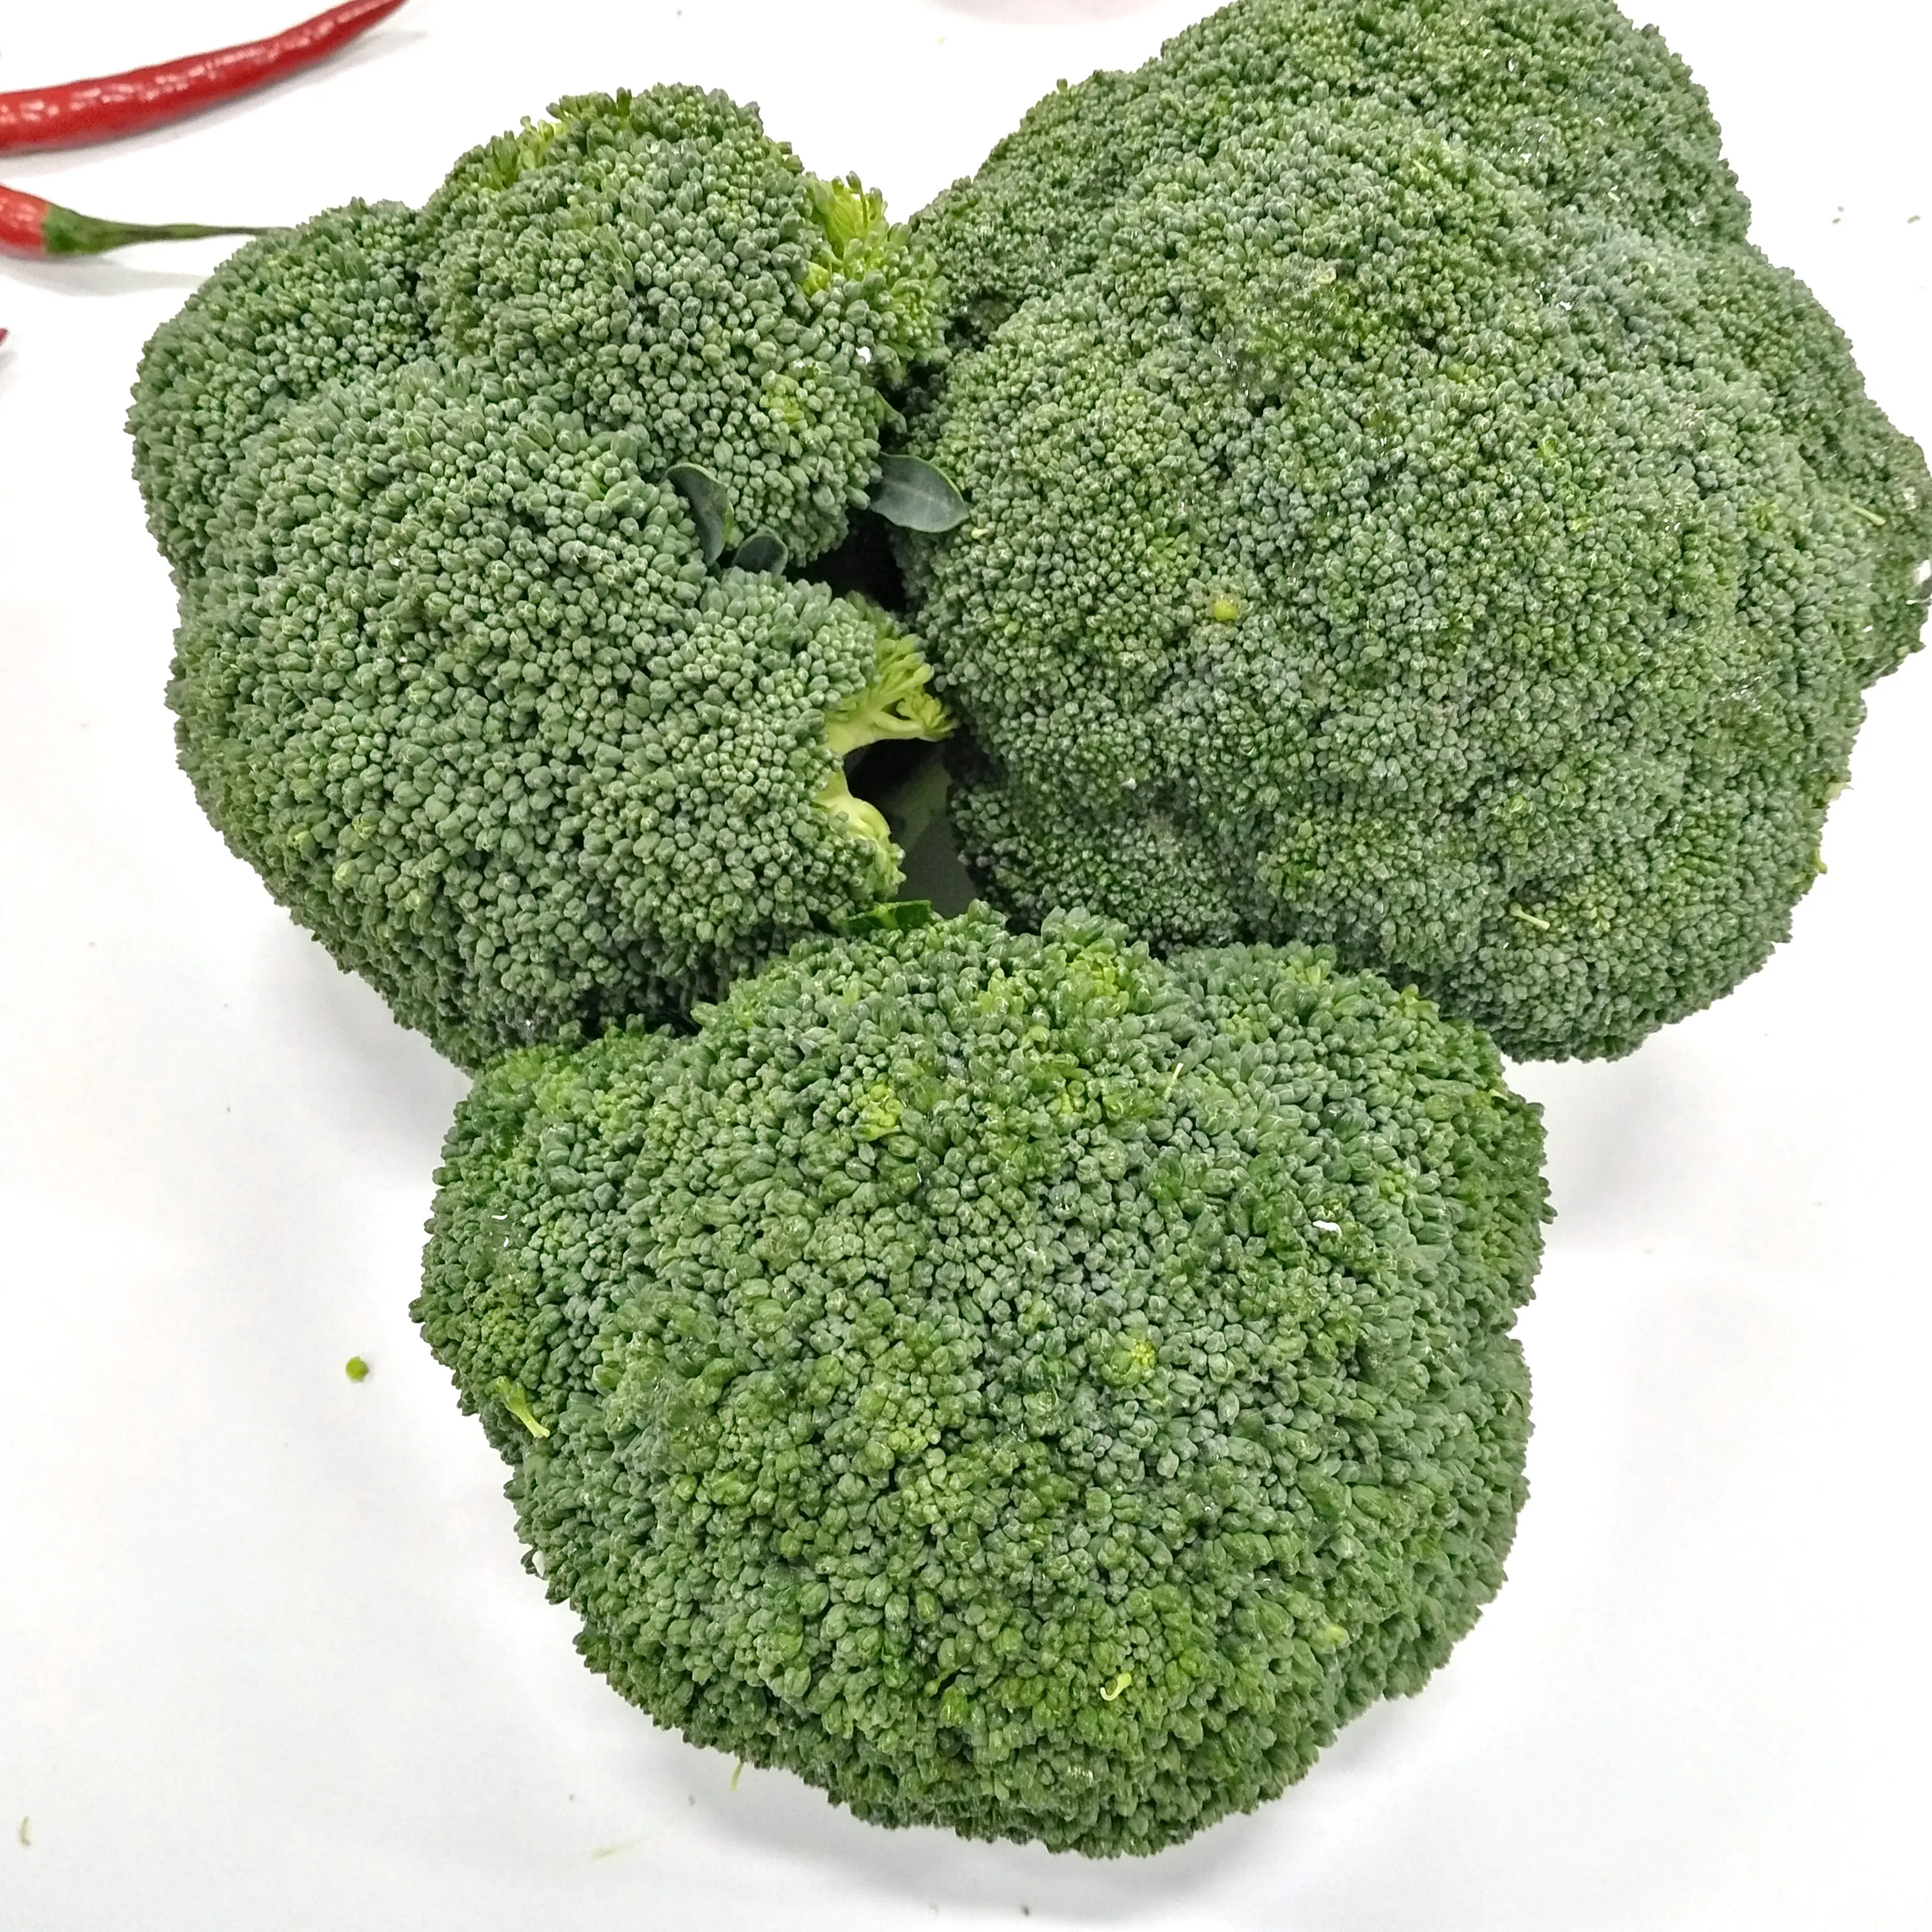 Buy Fresh/Frozen Green Broccoli For Sales Worldwide